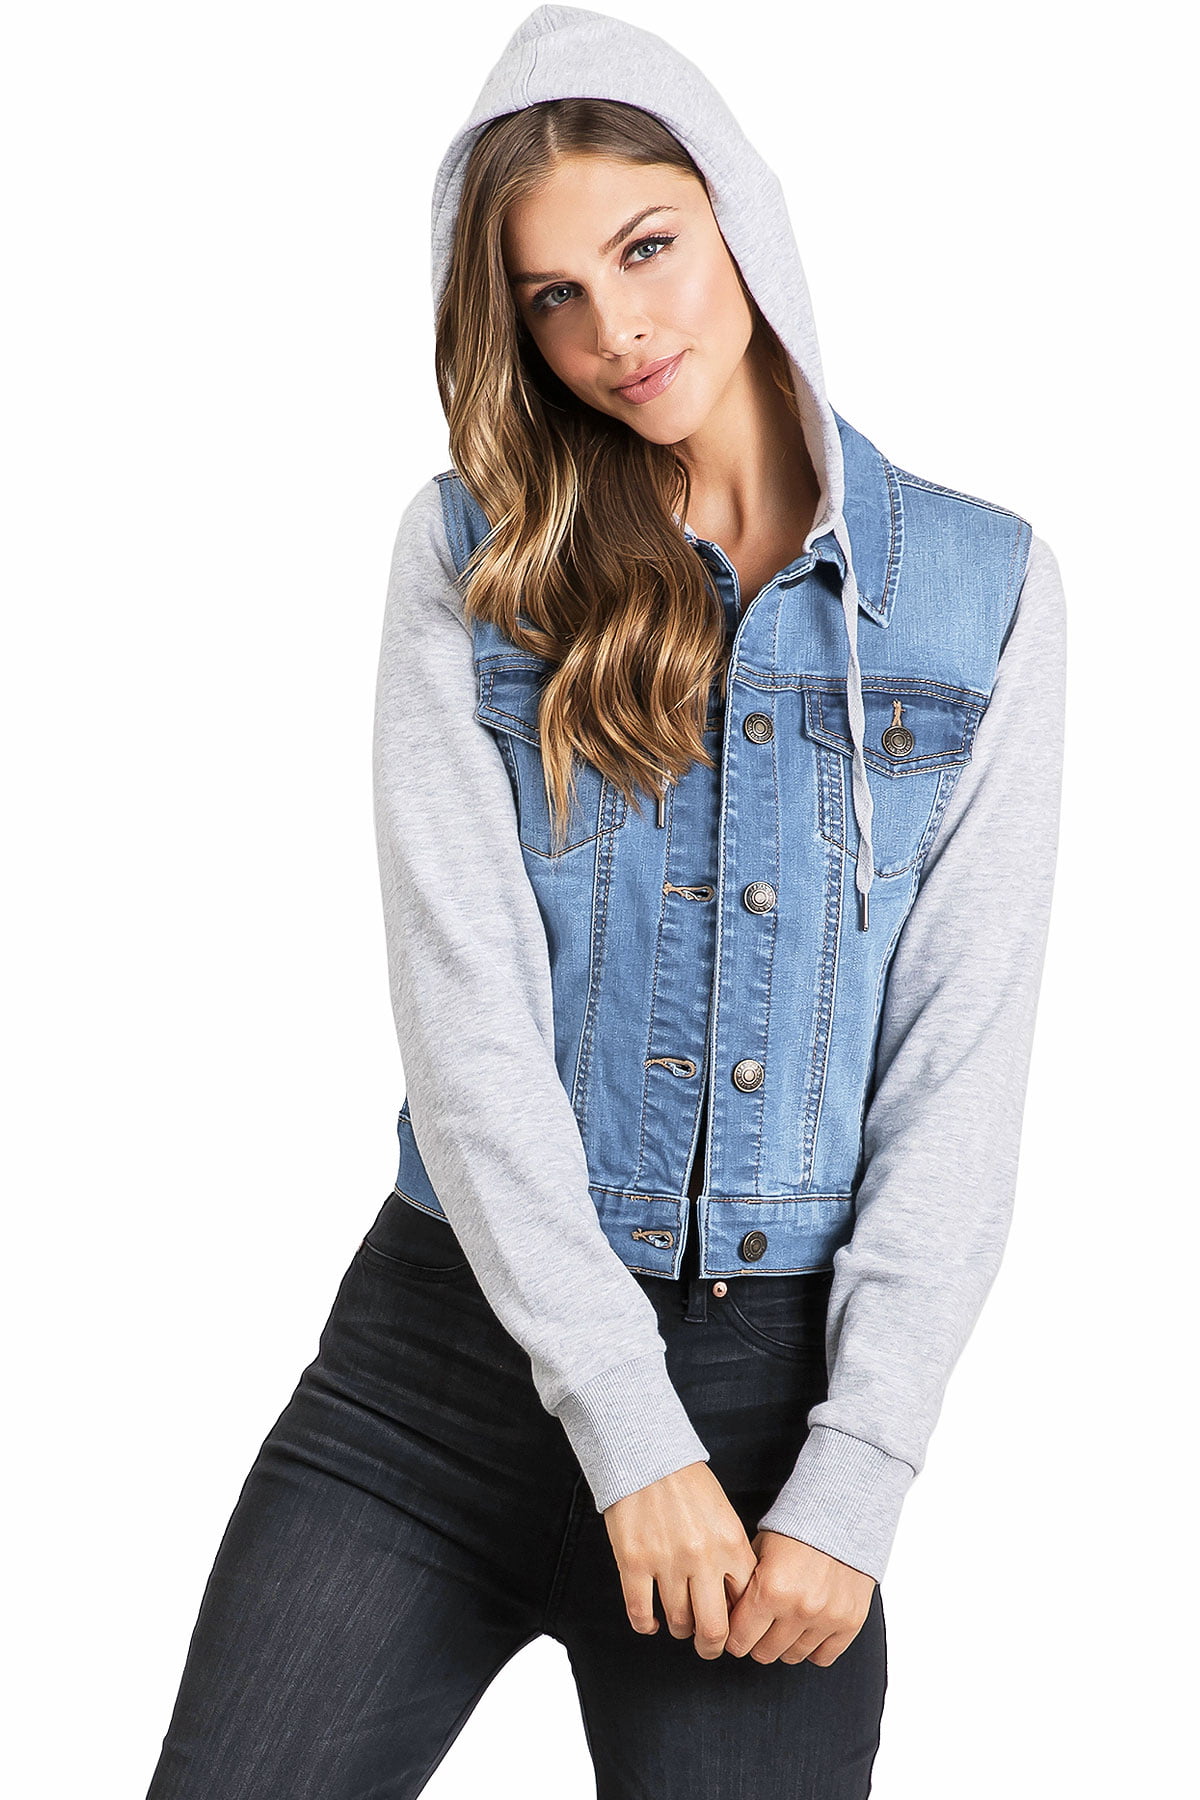 Wax Jean - Wax Jean Womens Causal Sweatshirt Hooded Denim Jacket (S ...